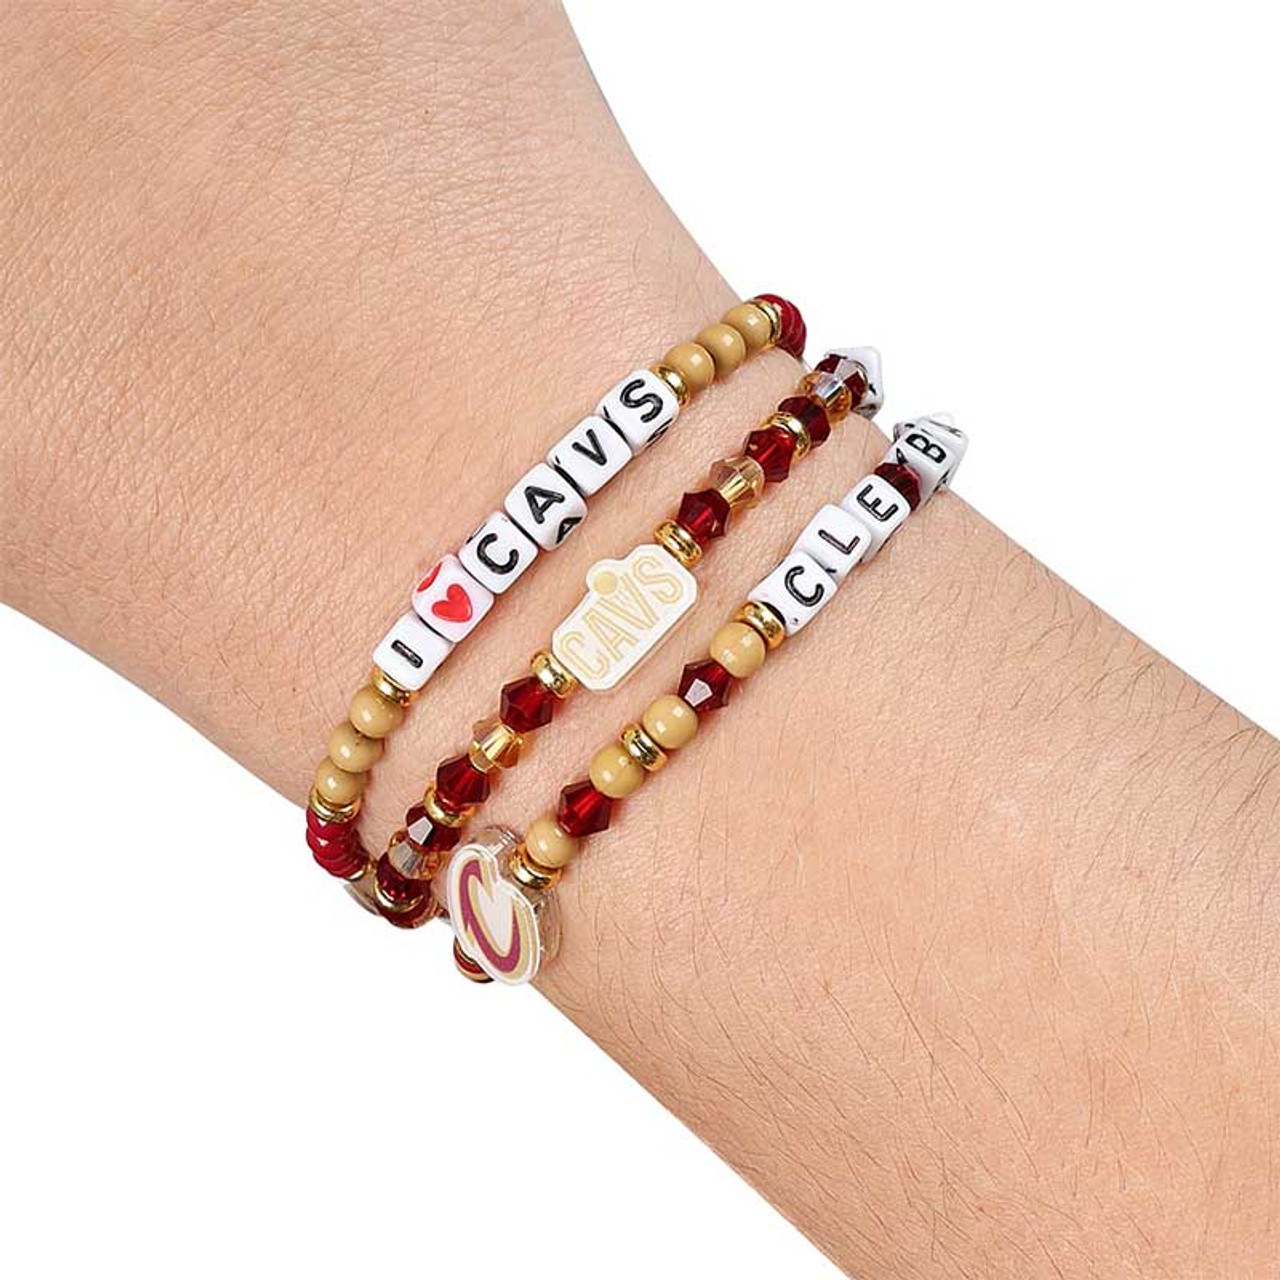 Rainbow Friendship Bracelets + a Free Printable - Amy Latta Creations